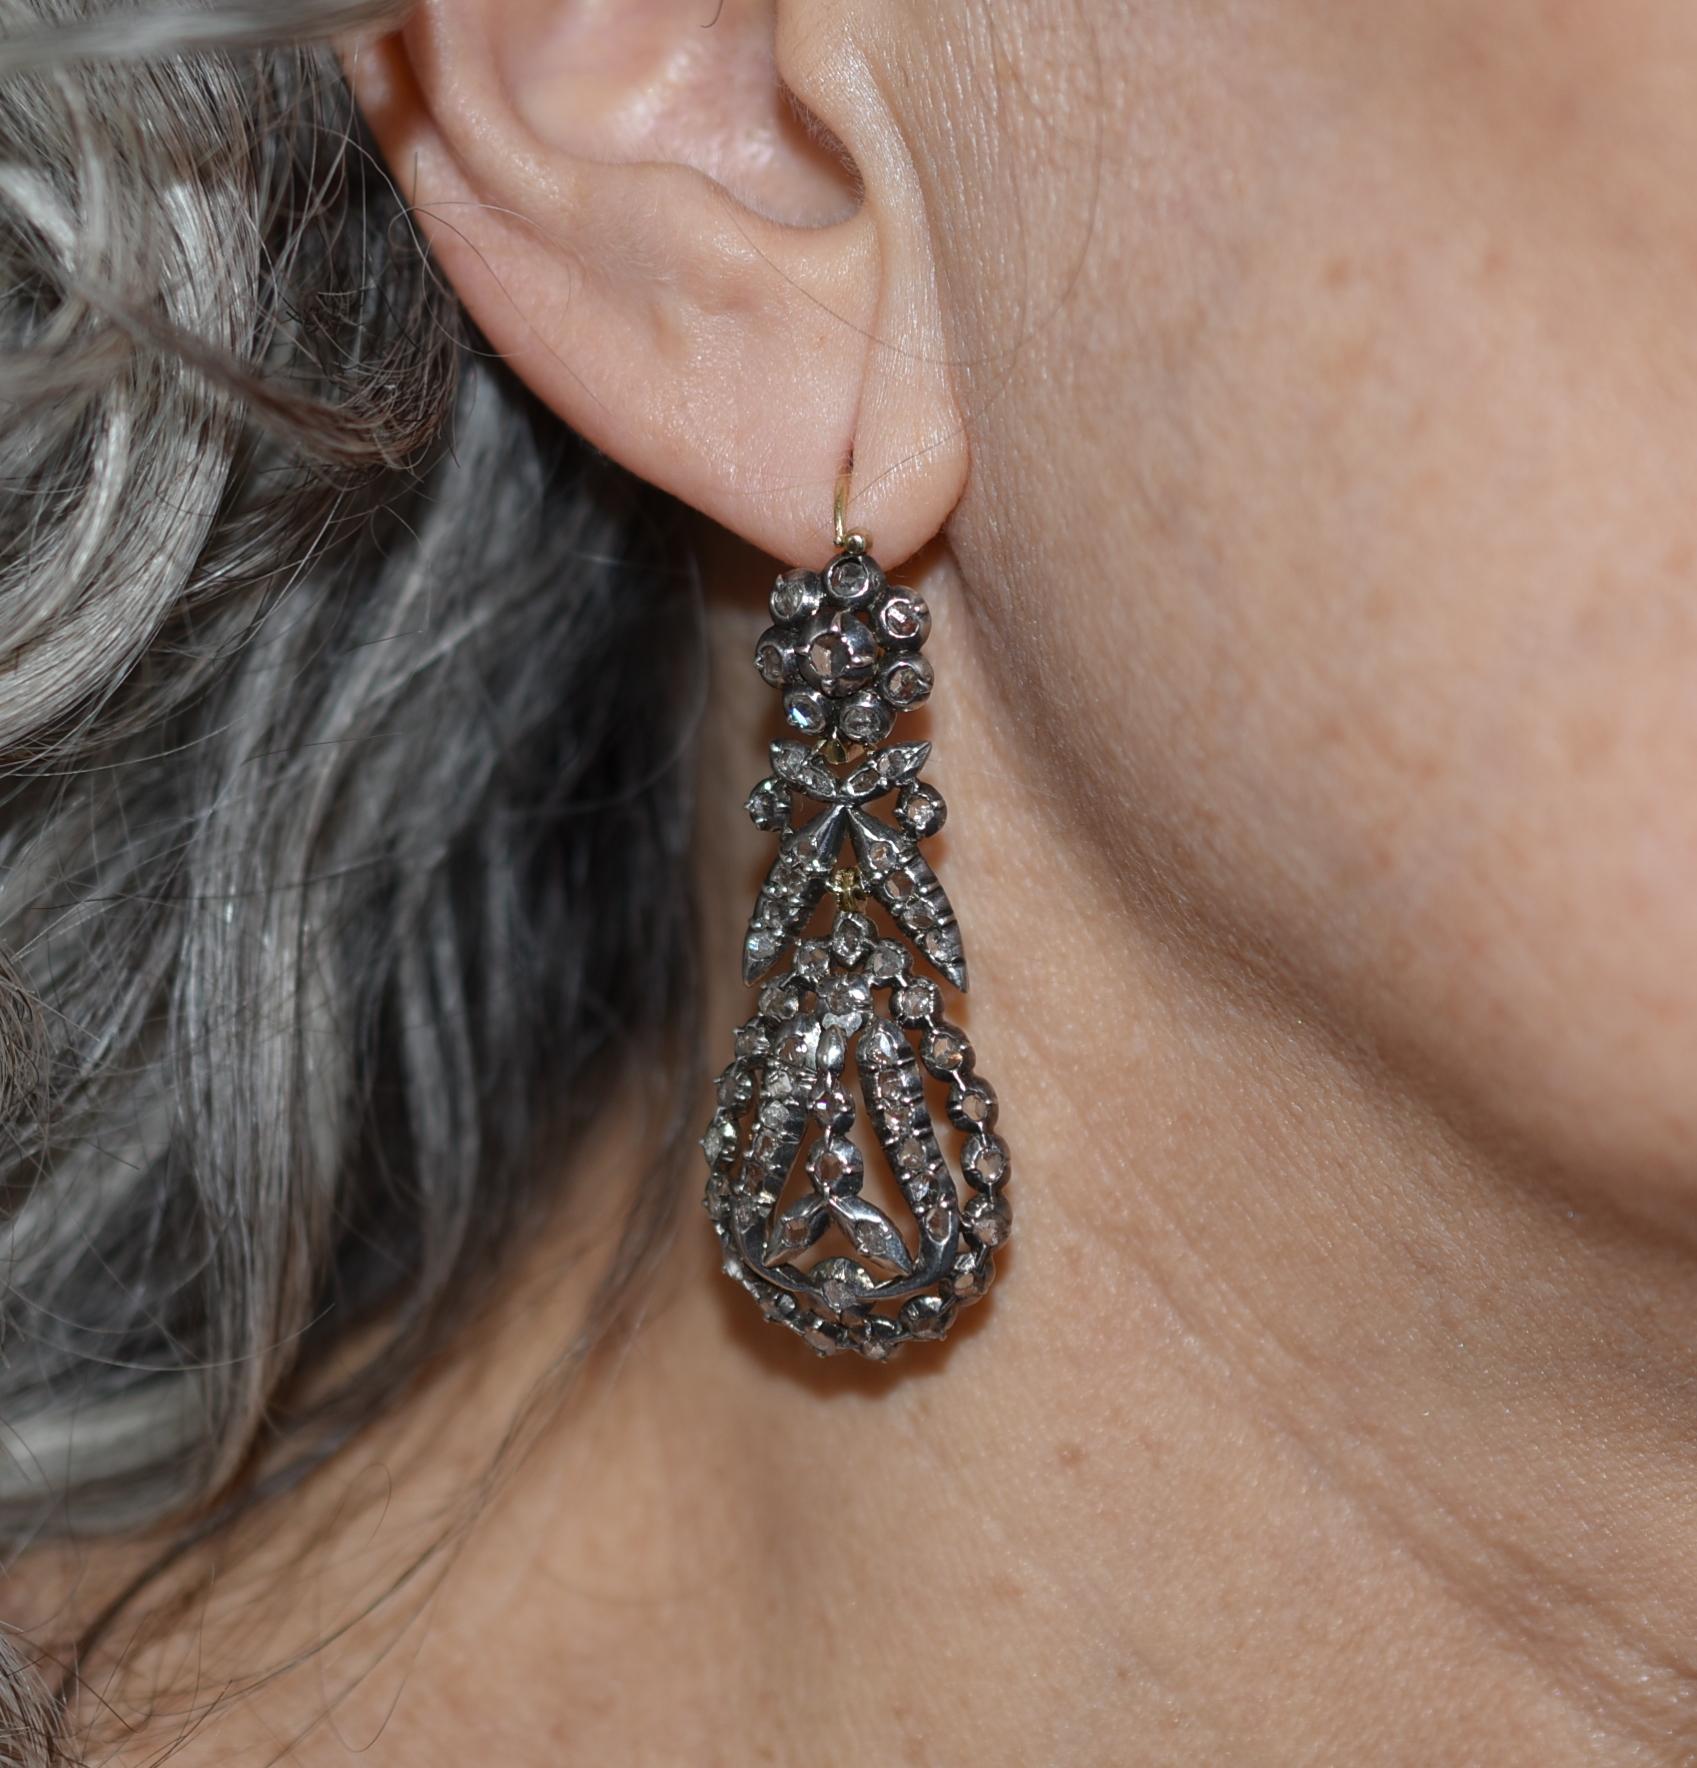 pendeloque earrings